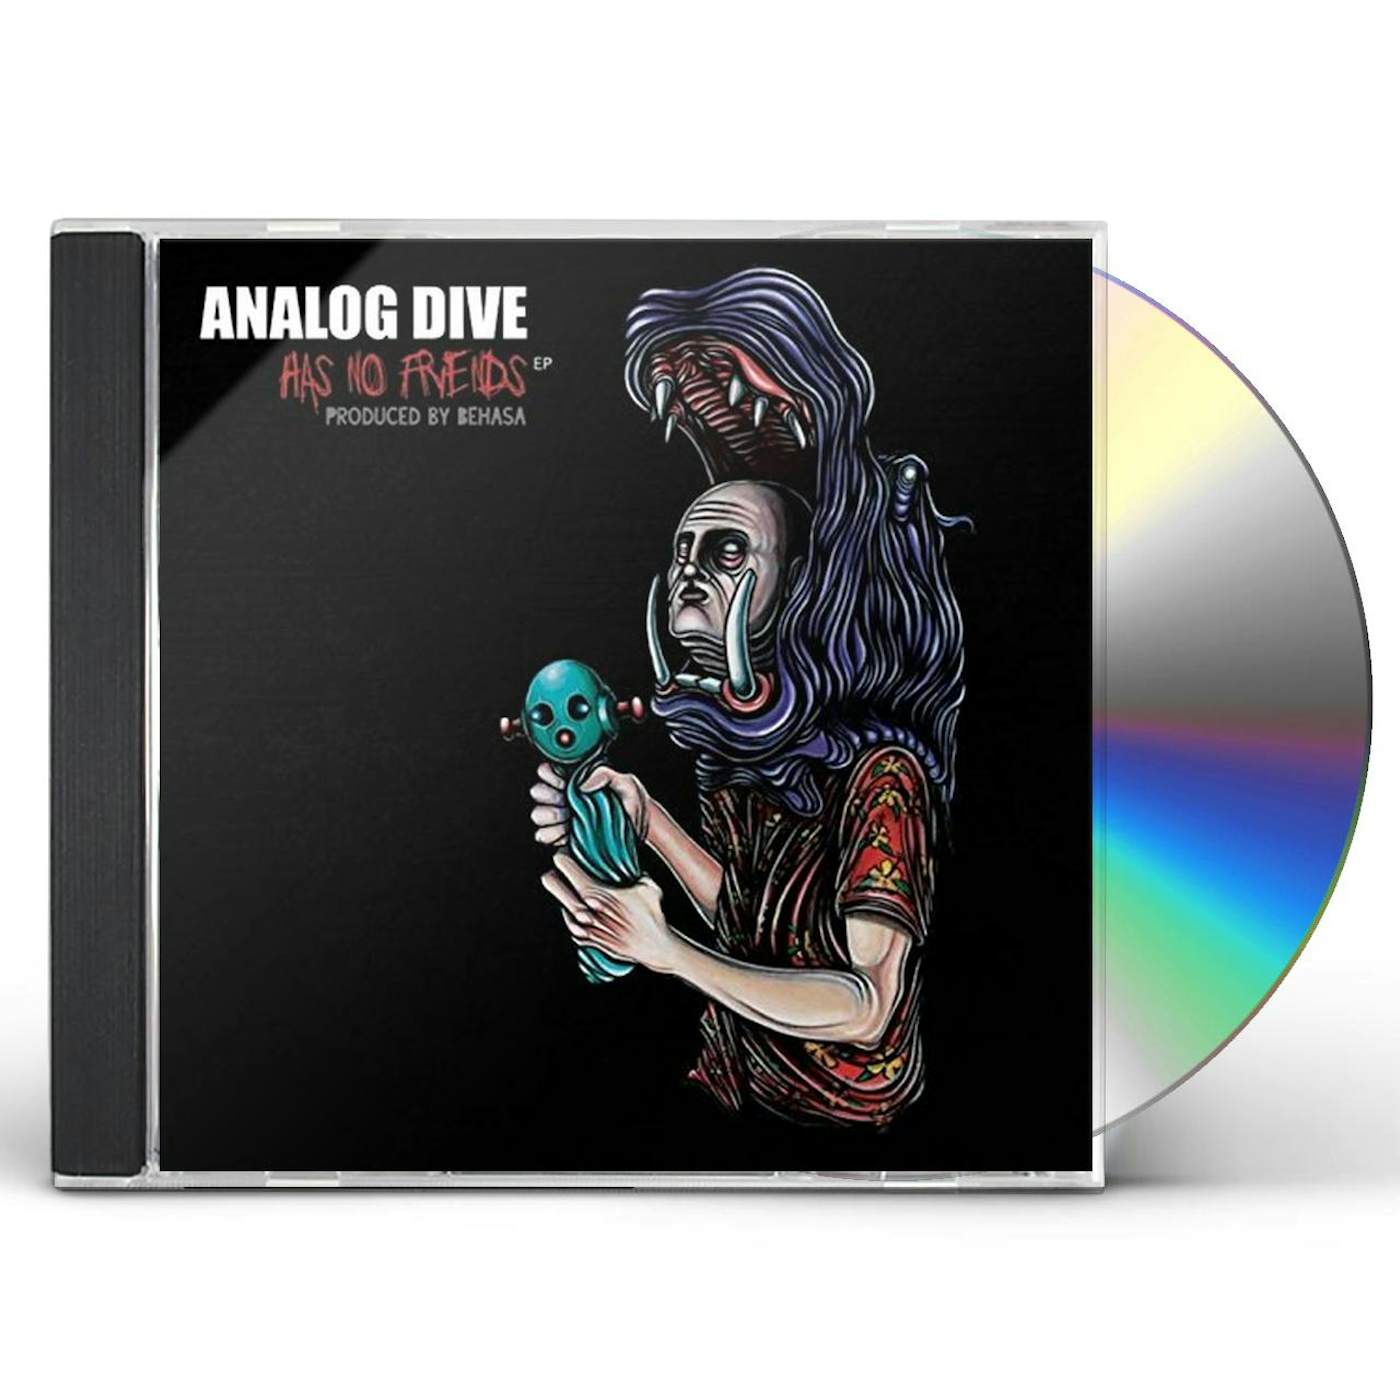 Analog Dive HAS NO FRIENDS-EP CD